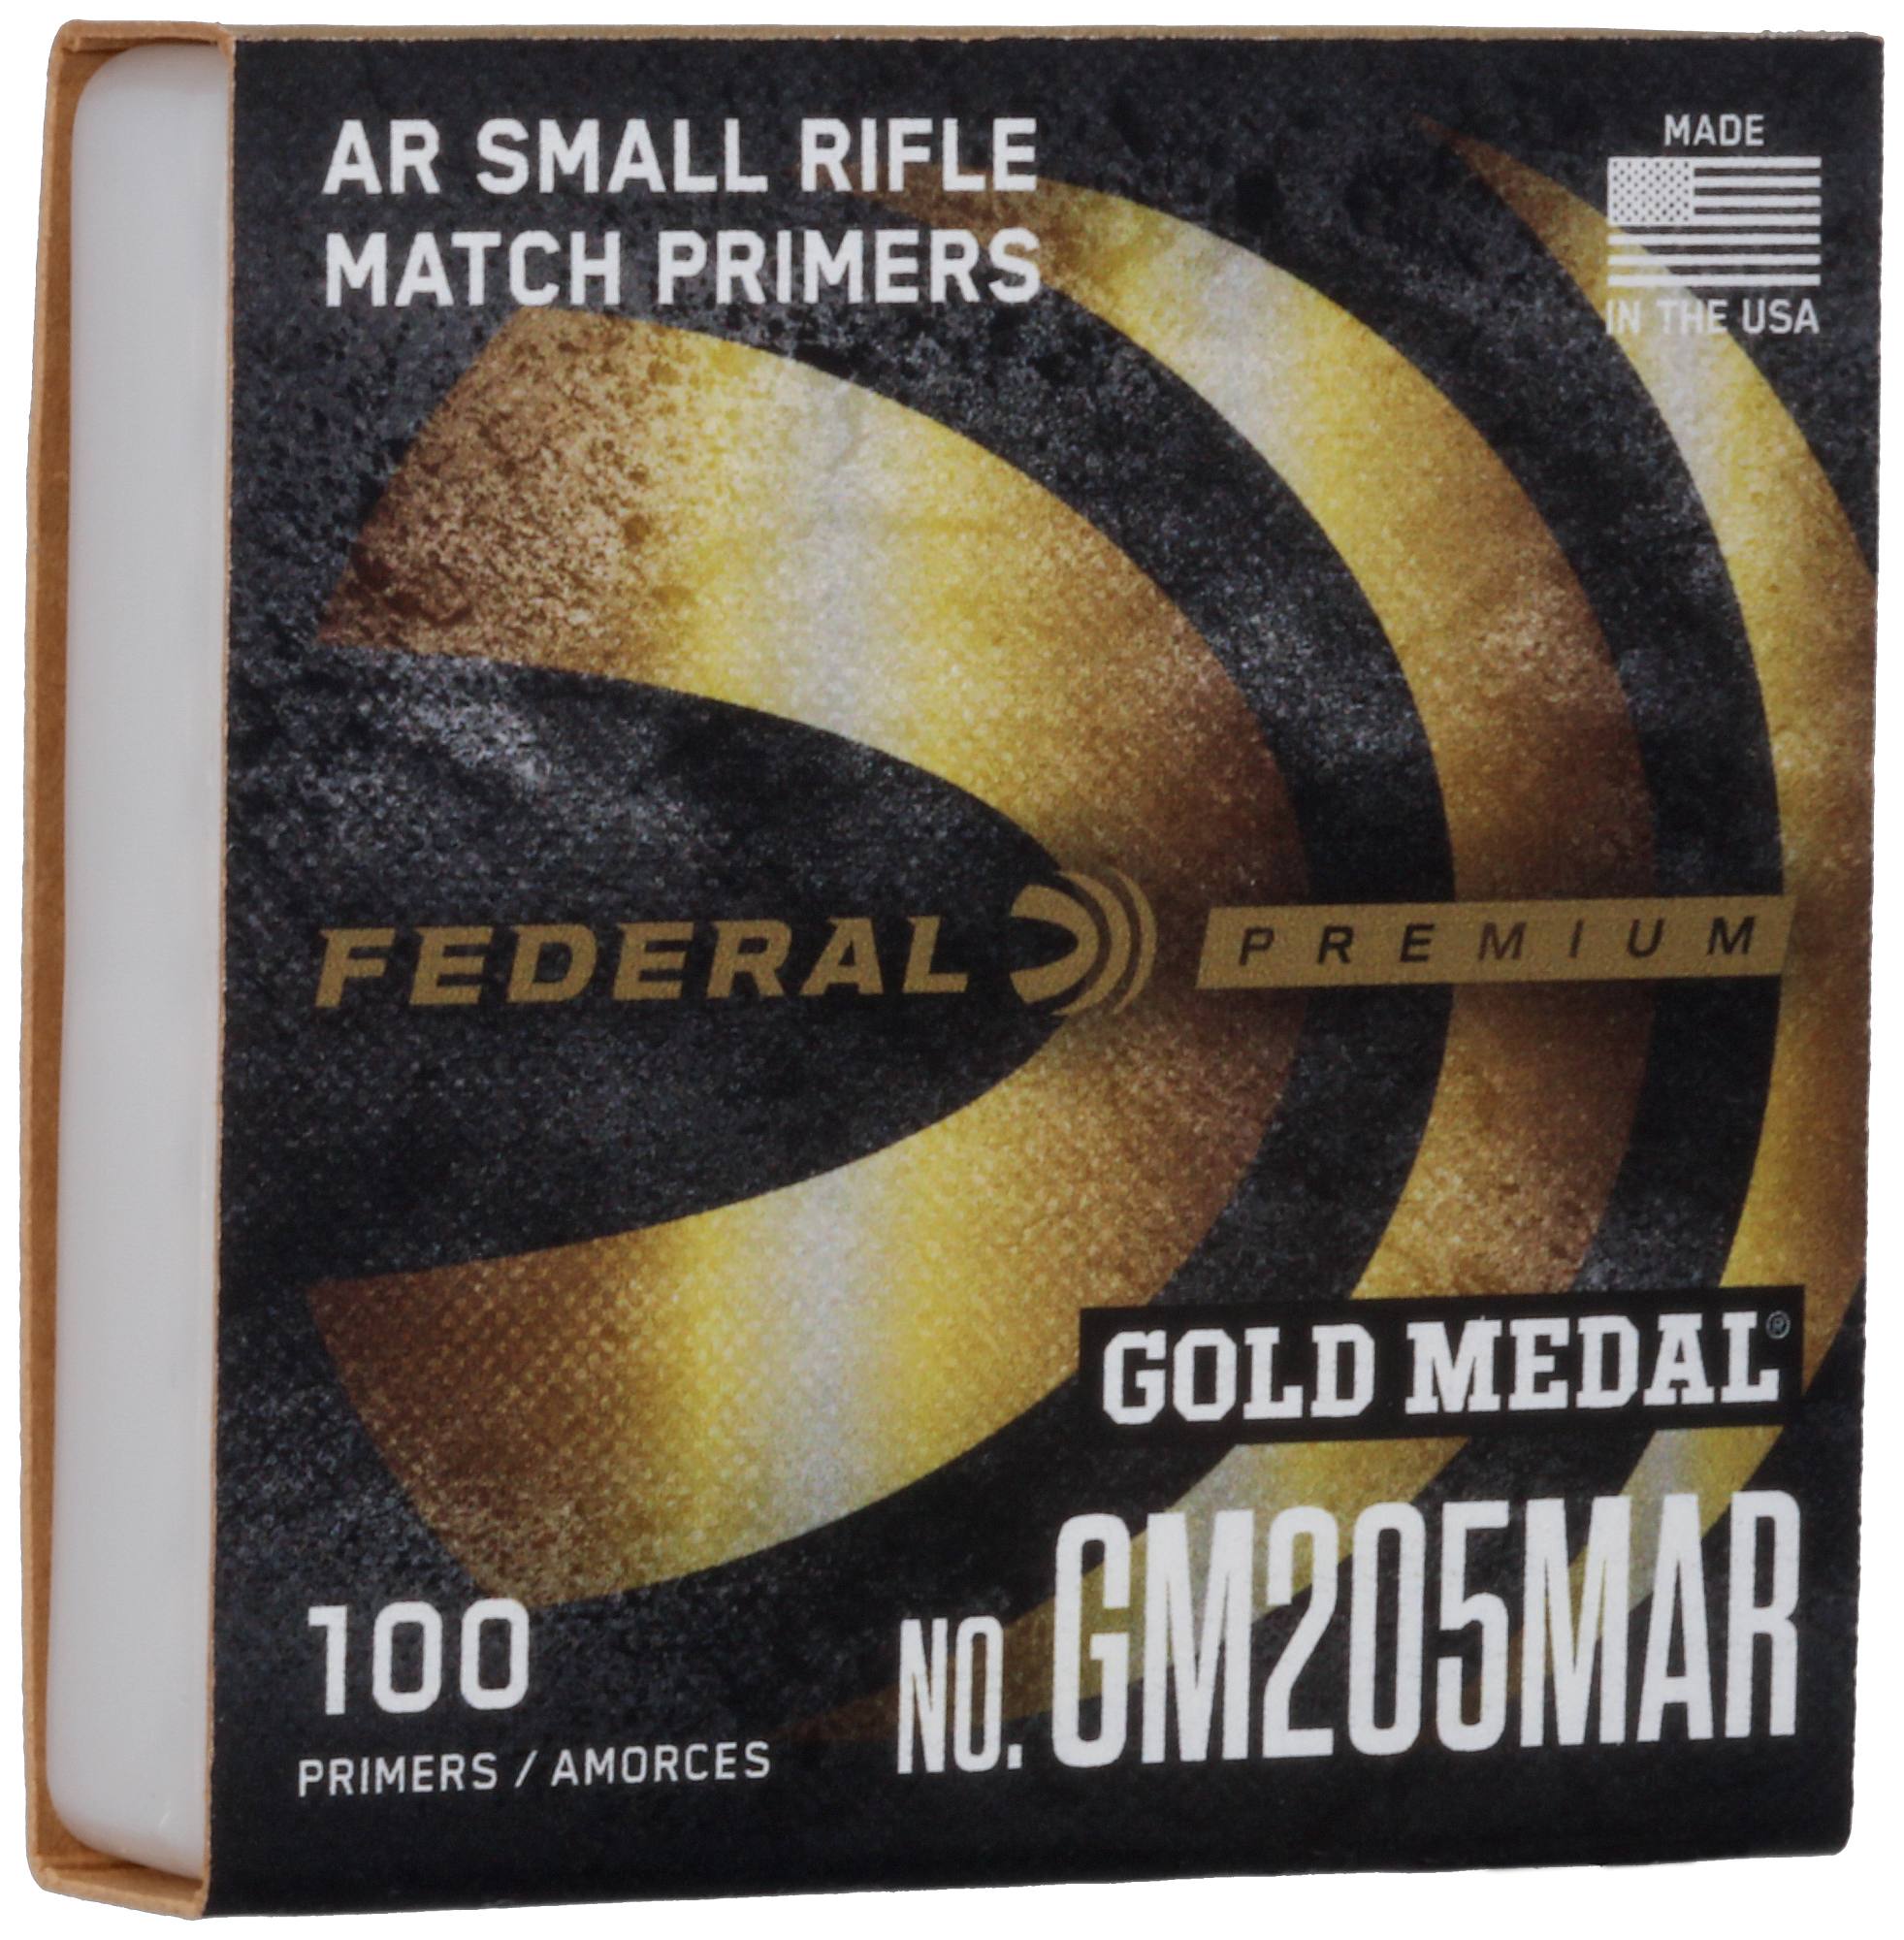 Buy Gold Medal AR Centerfire Primer for USD 7.99 | Federal Ammunition